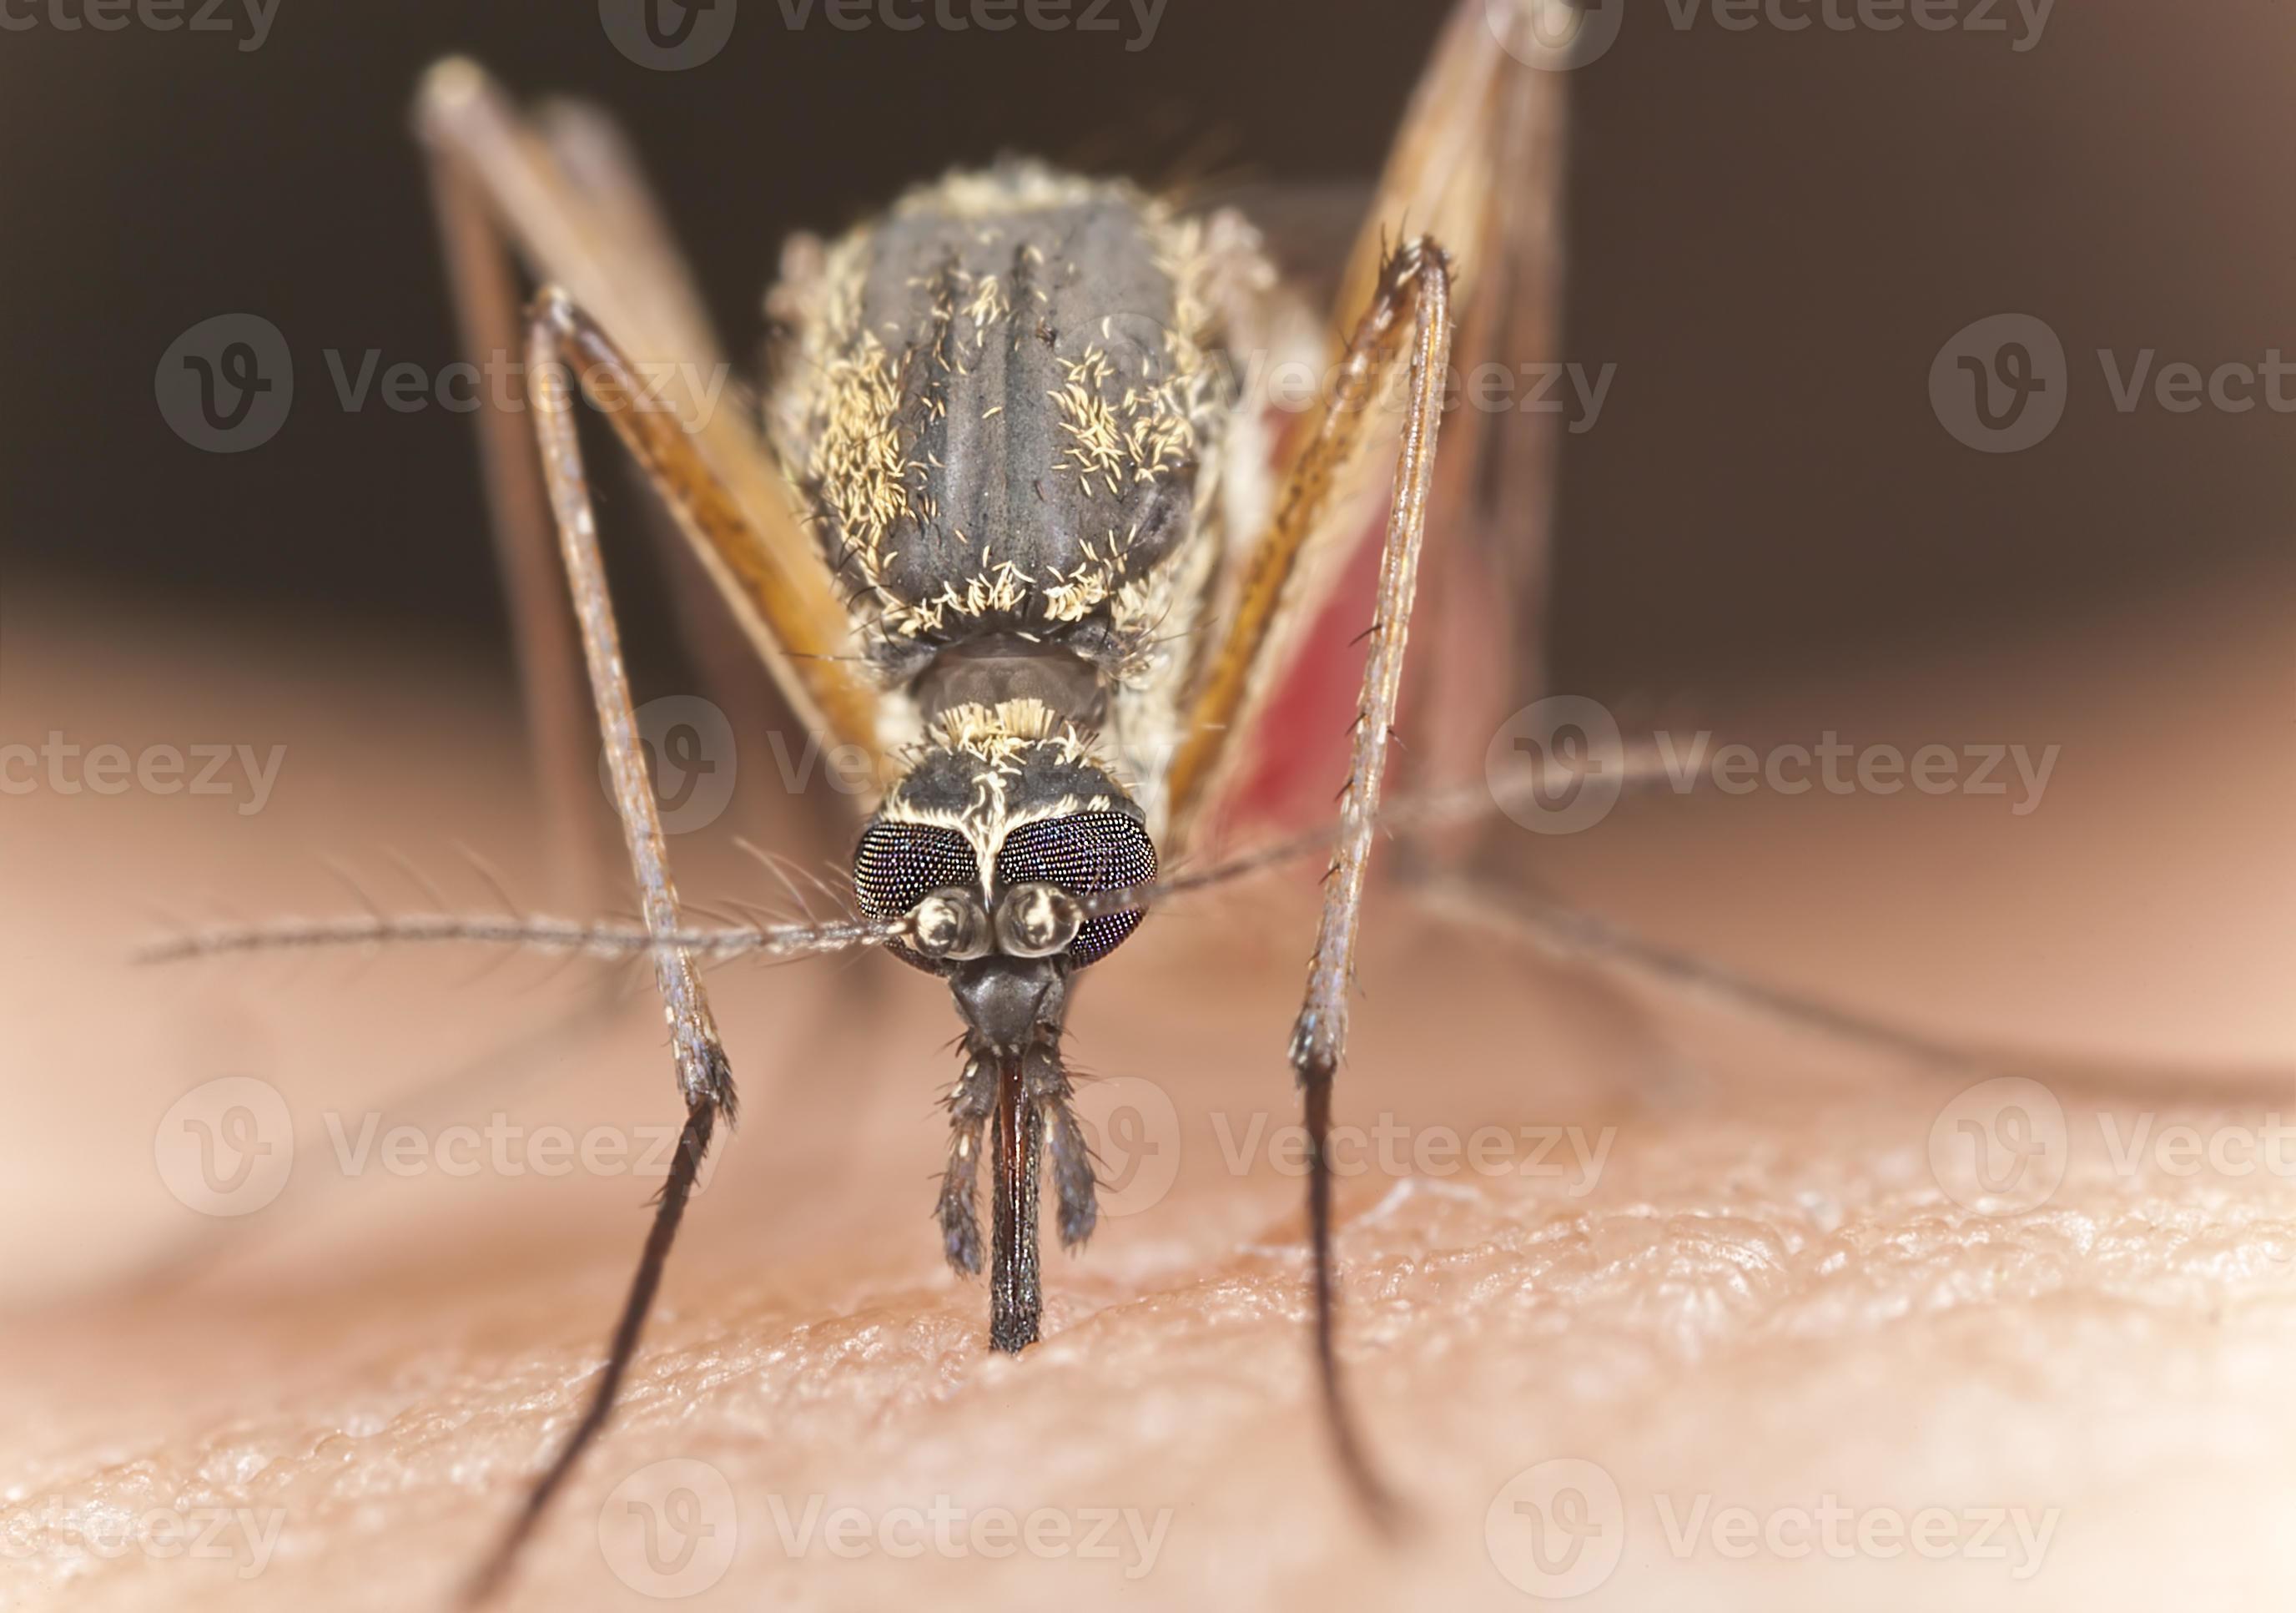 Mosquito sucking blood, extreme close-up photo